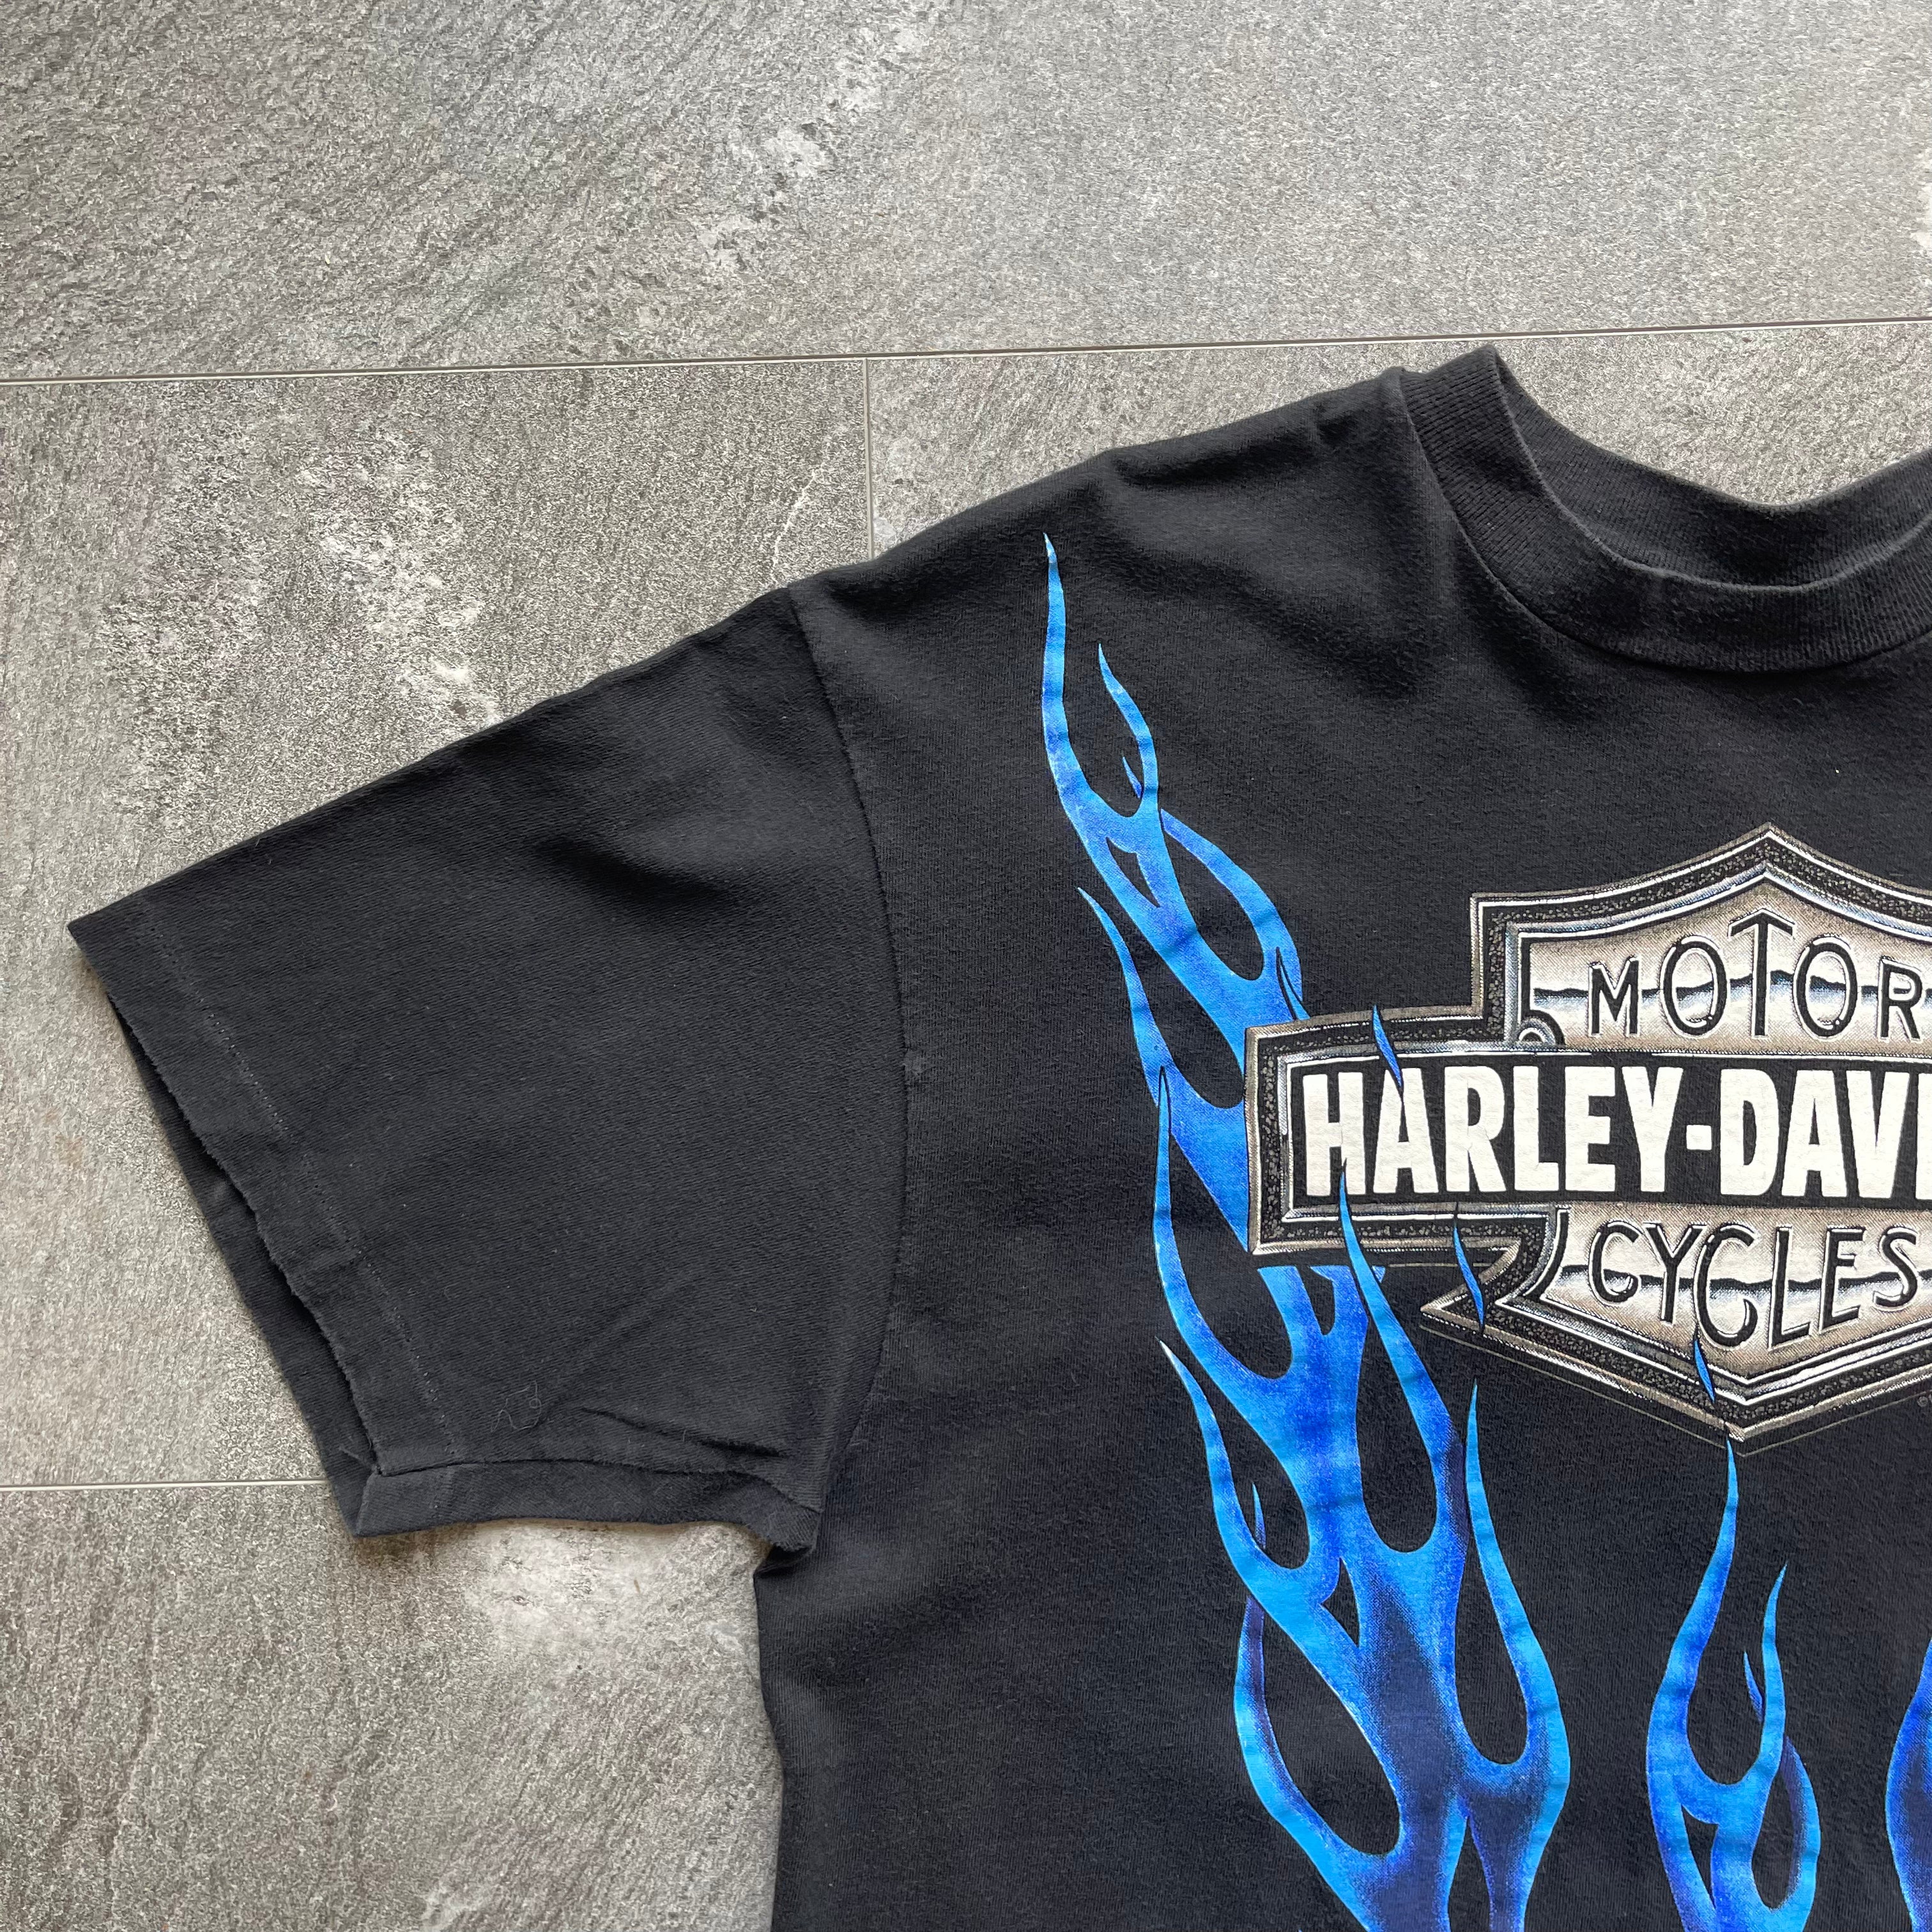 Harley Davidson 'DICKS' Rome, New York 1987 Made in USA